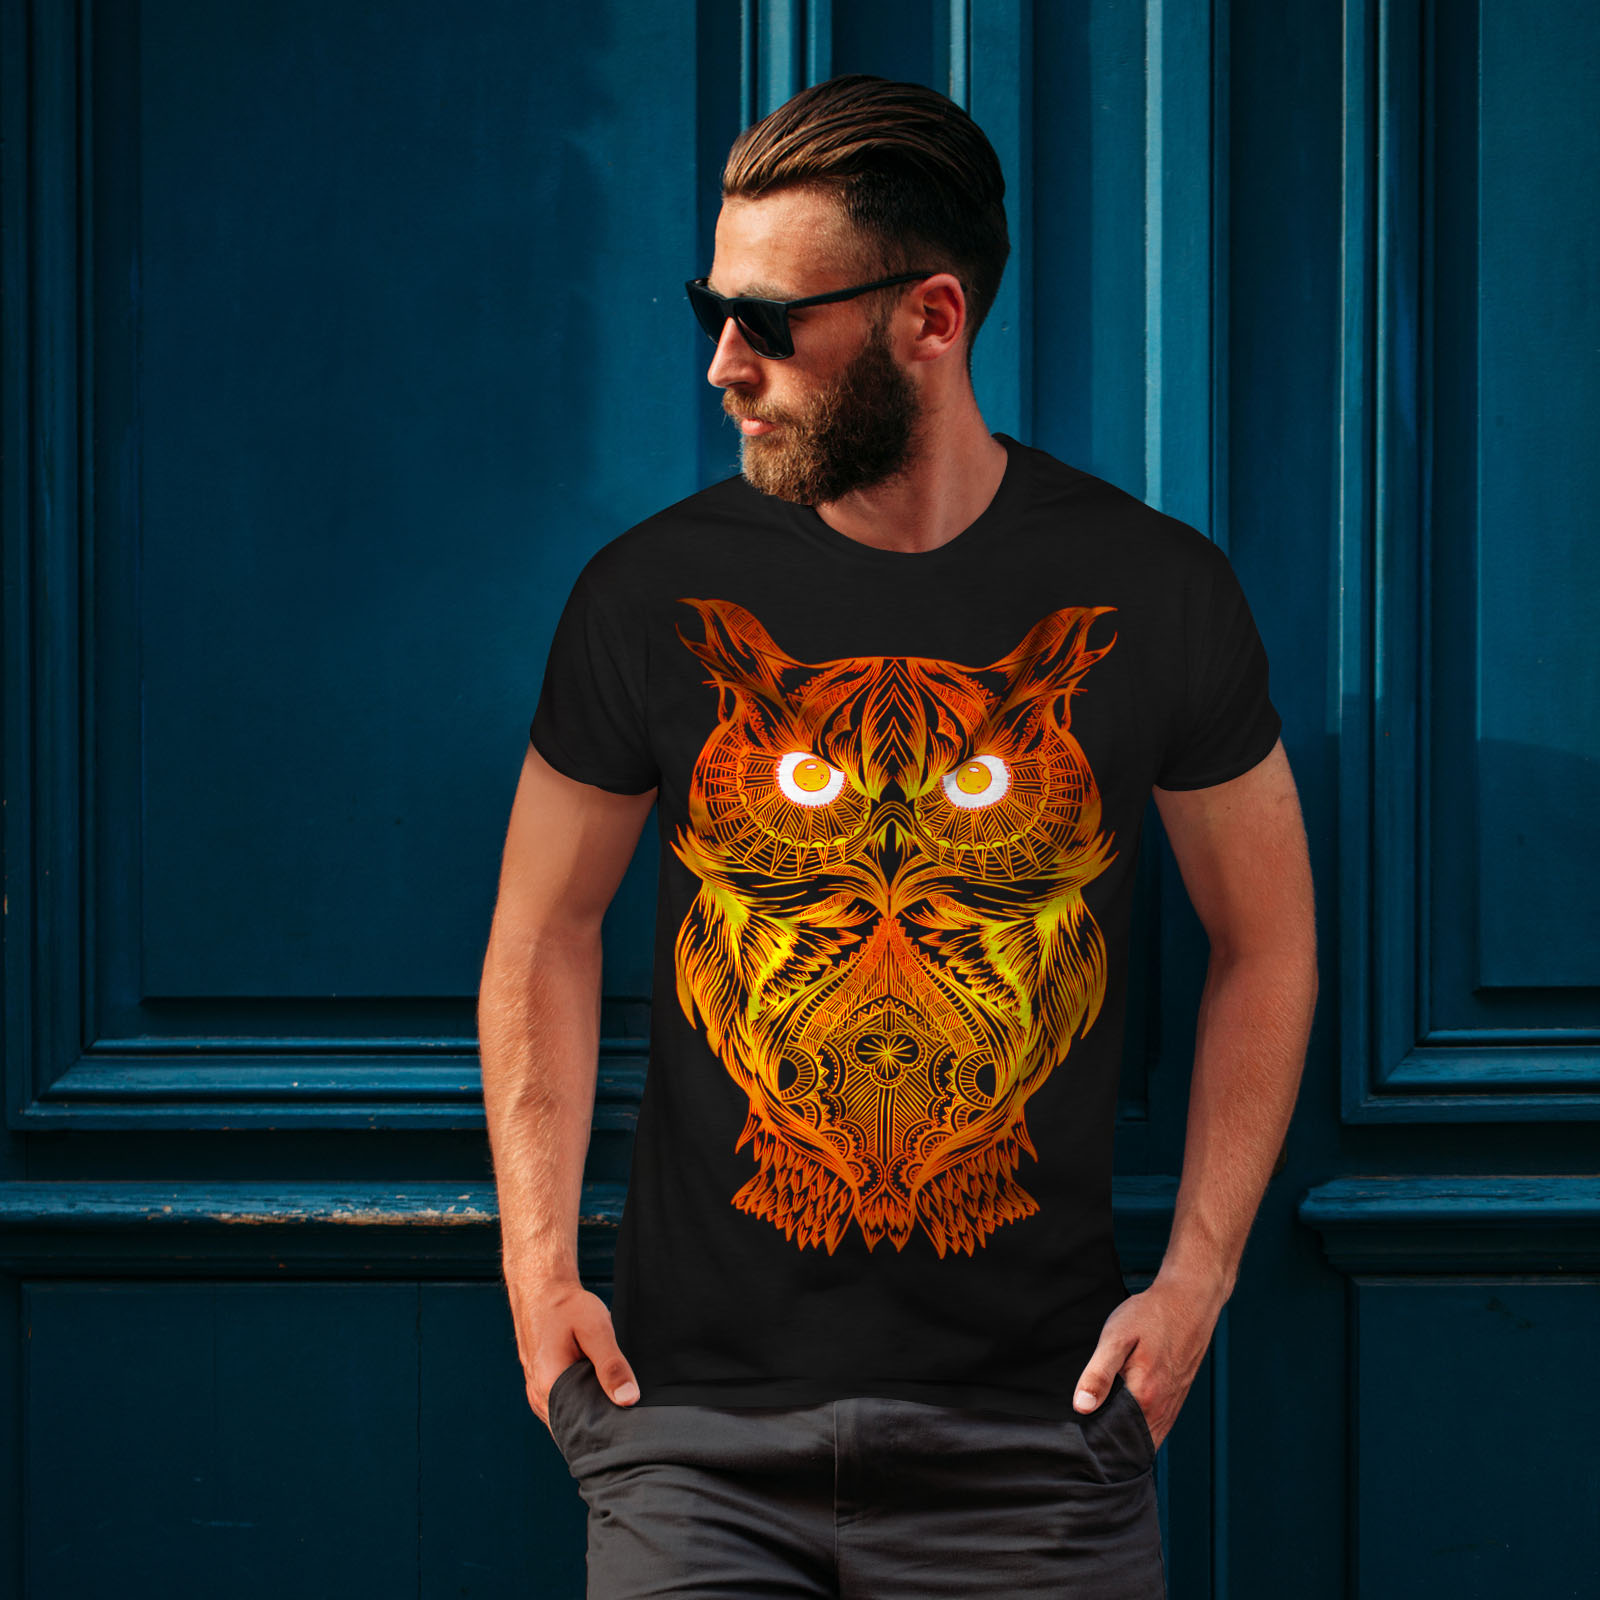 thumbnail 4  - Wellcoda Night Owl On Fire Mens T-shirt, Burning Graphic Design Printed Tee